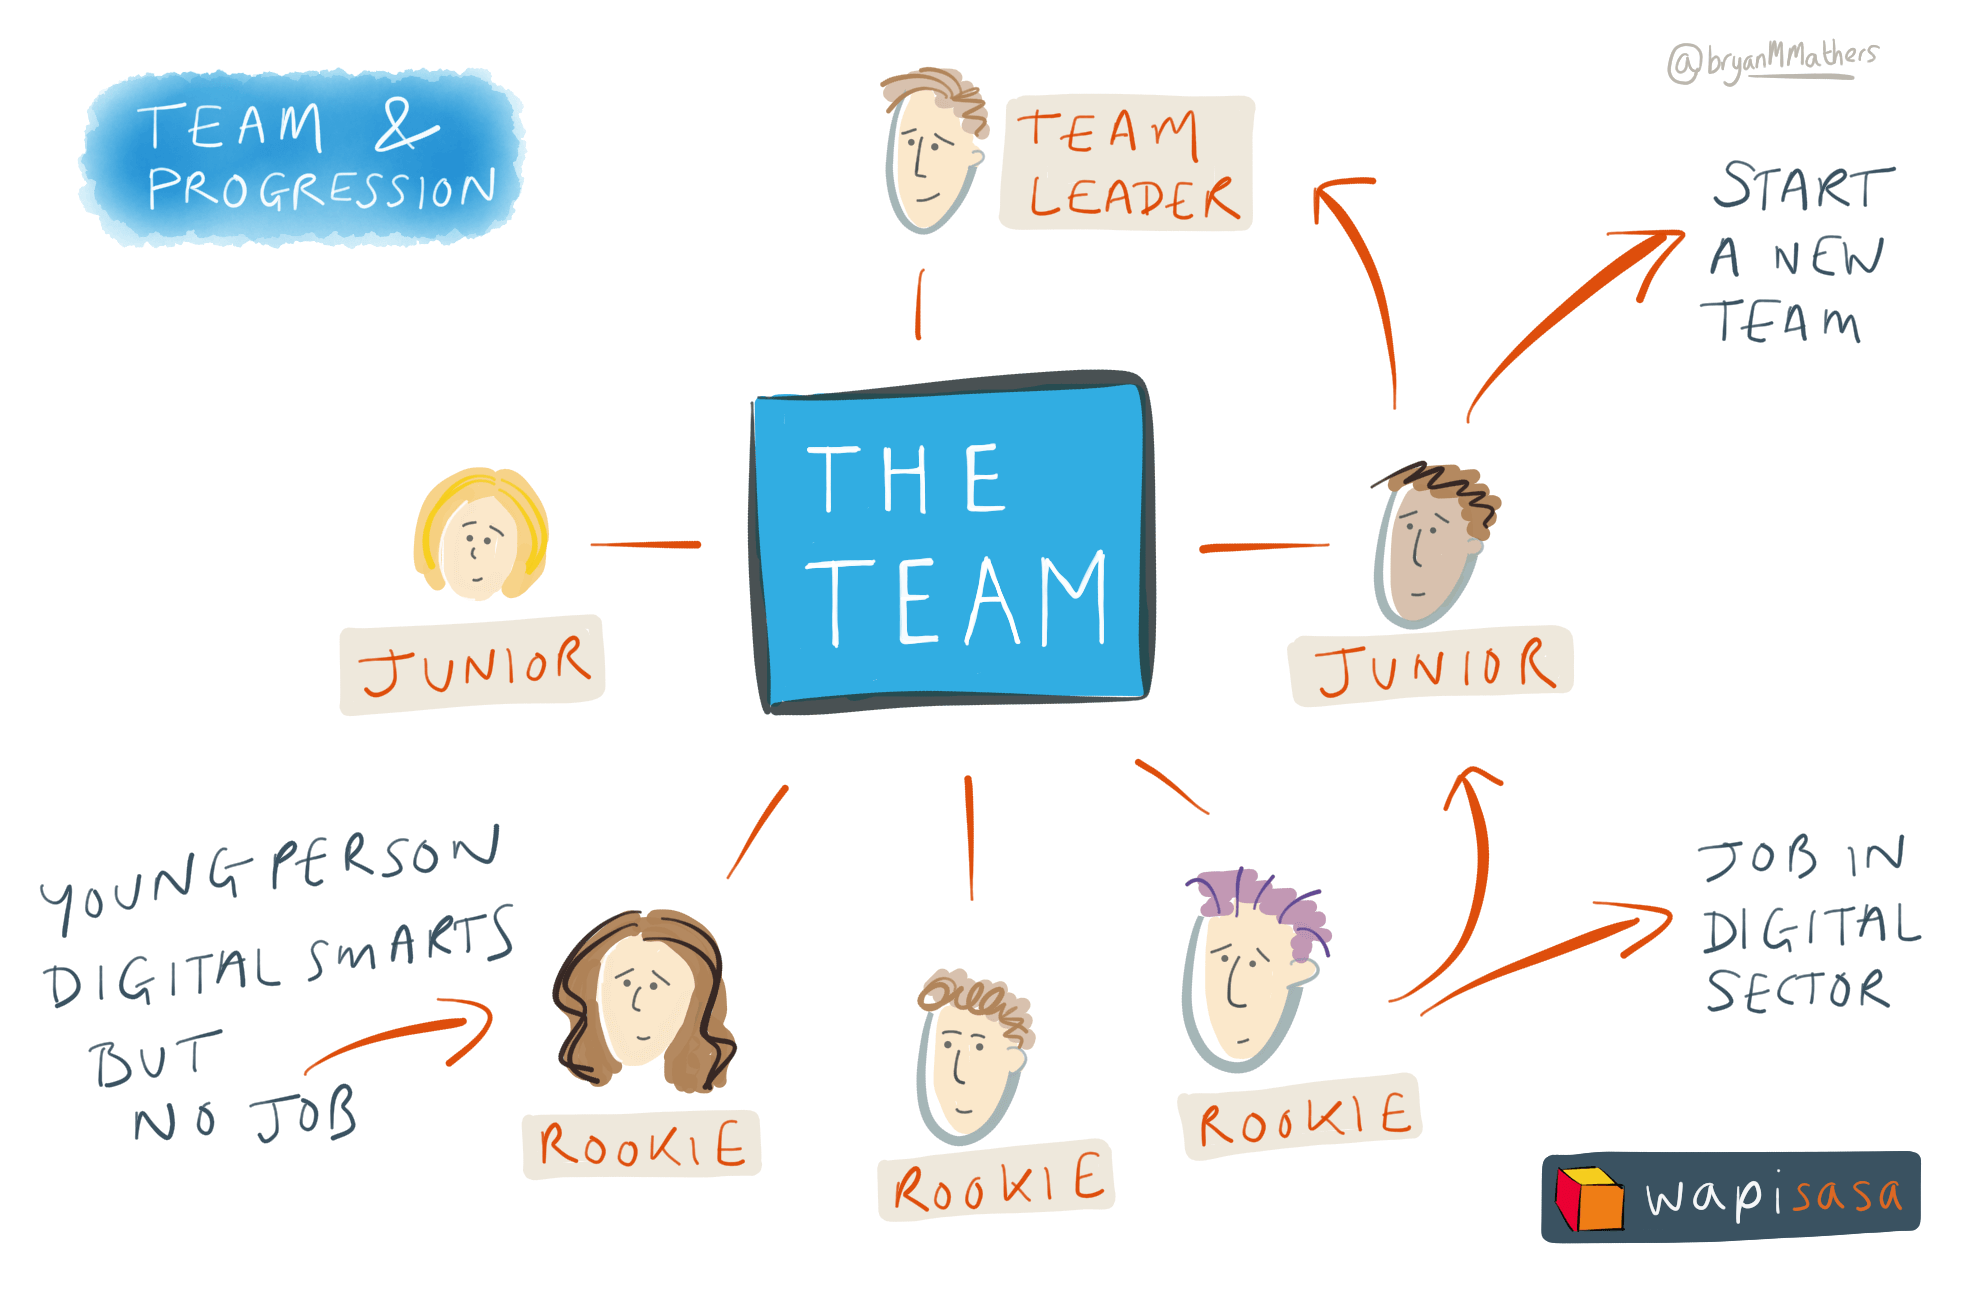 wapisasa – The team structure